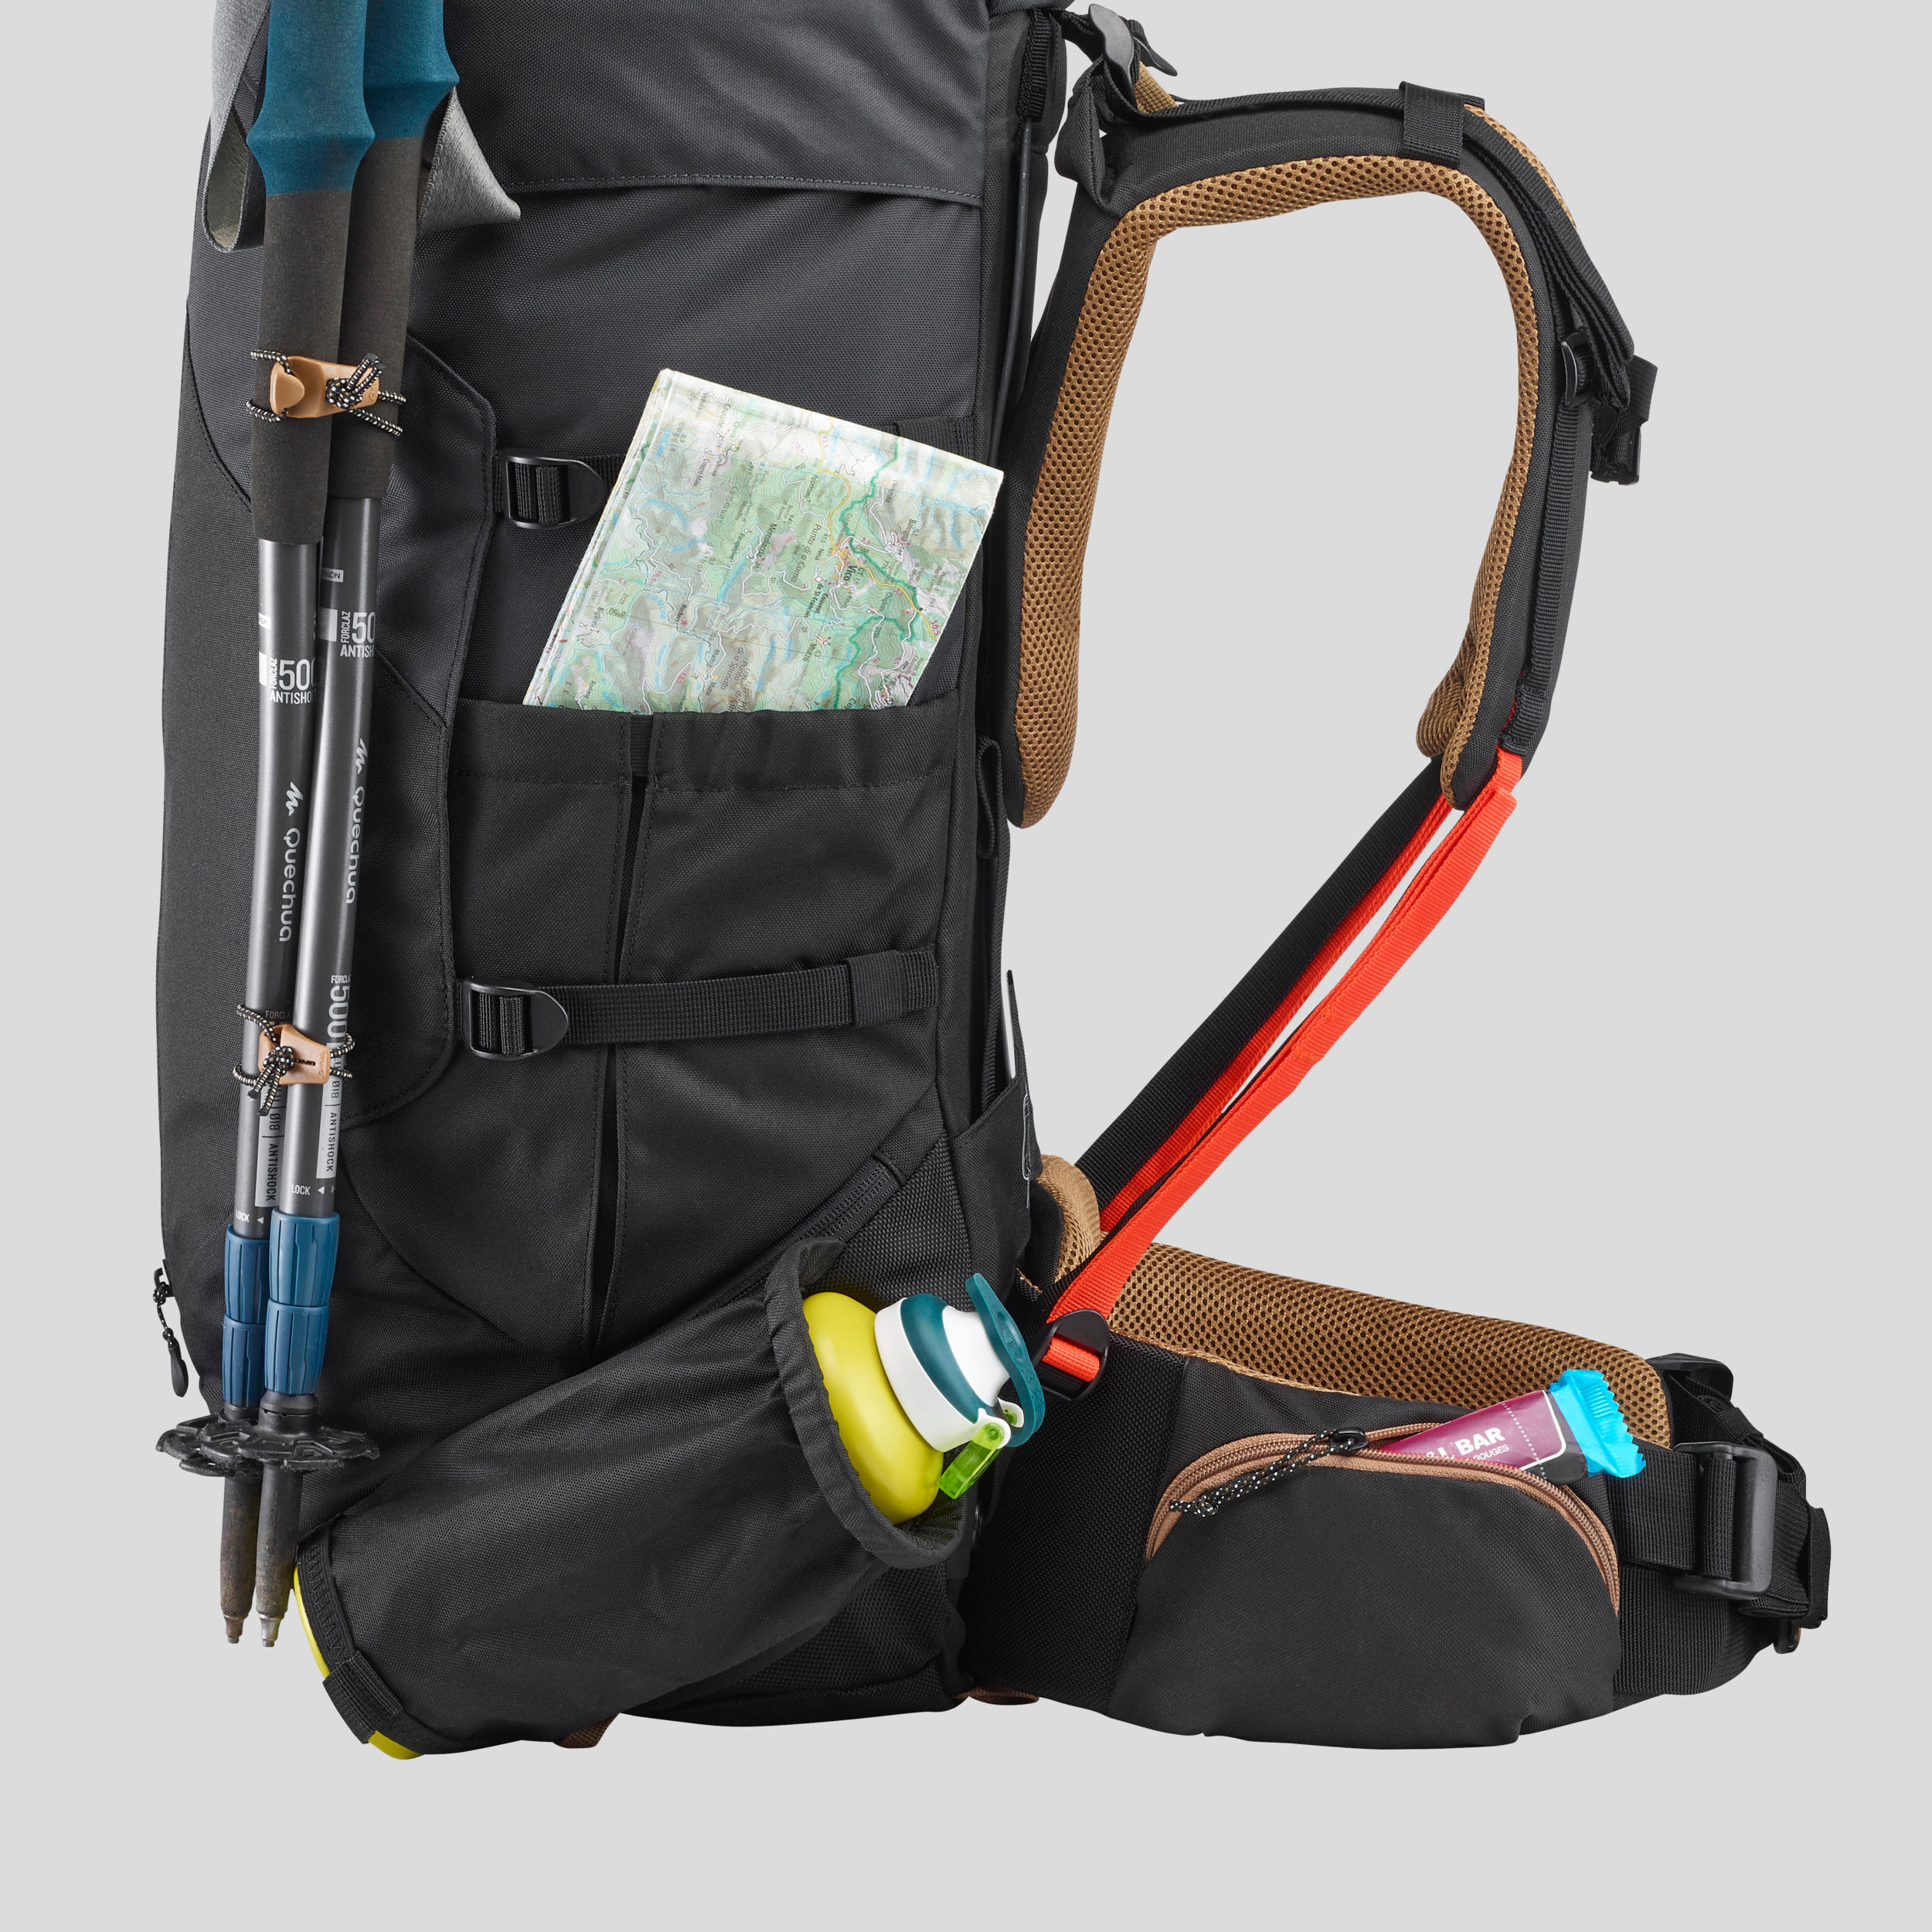 Men's Trekking Backpack 50 L - MT100 EASYFIT 12/20